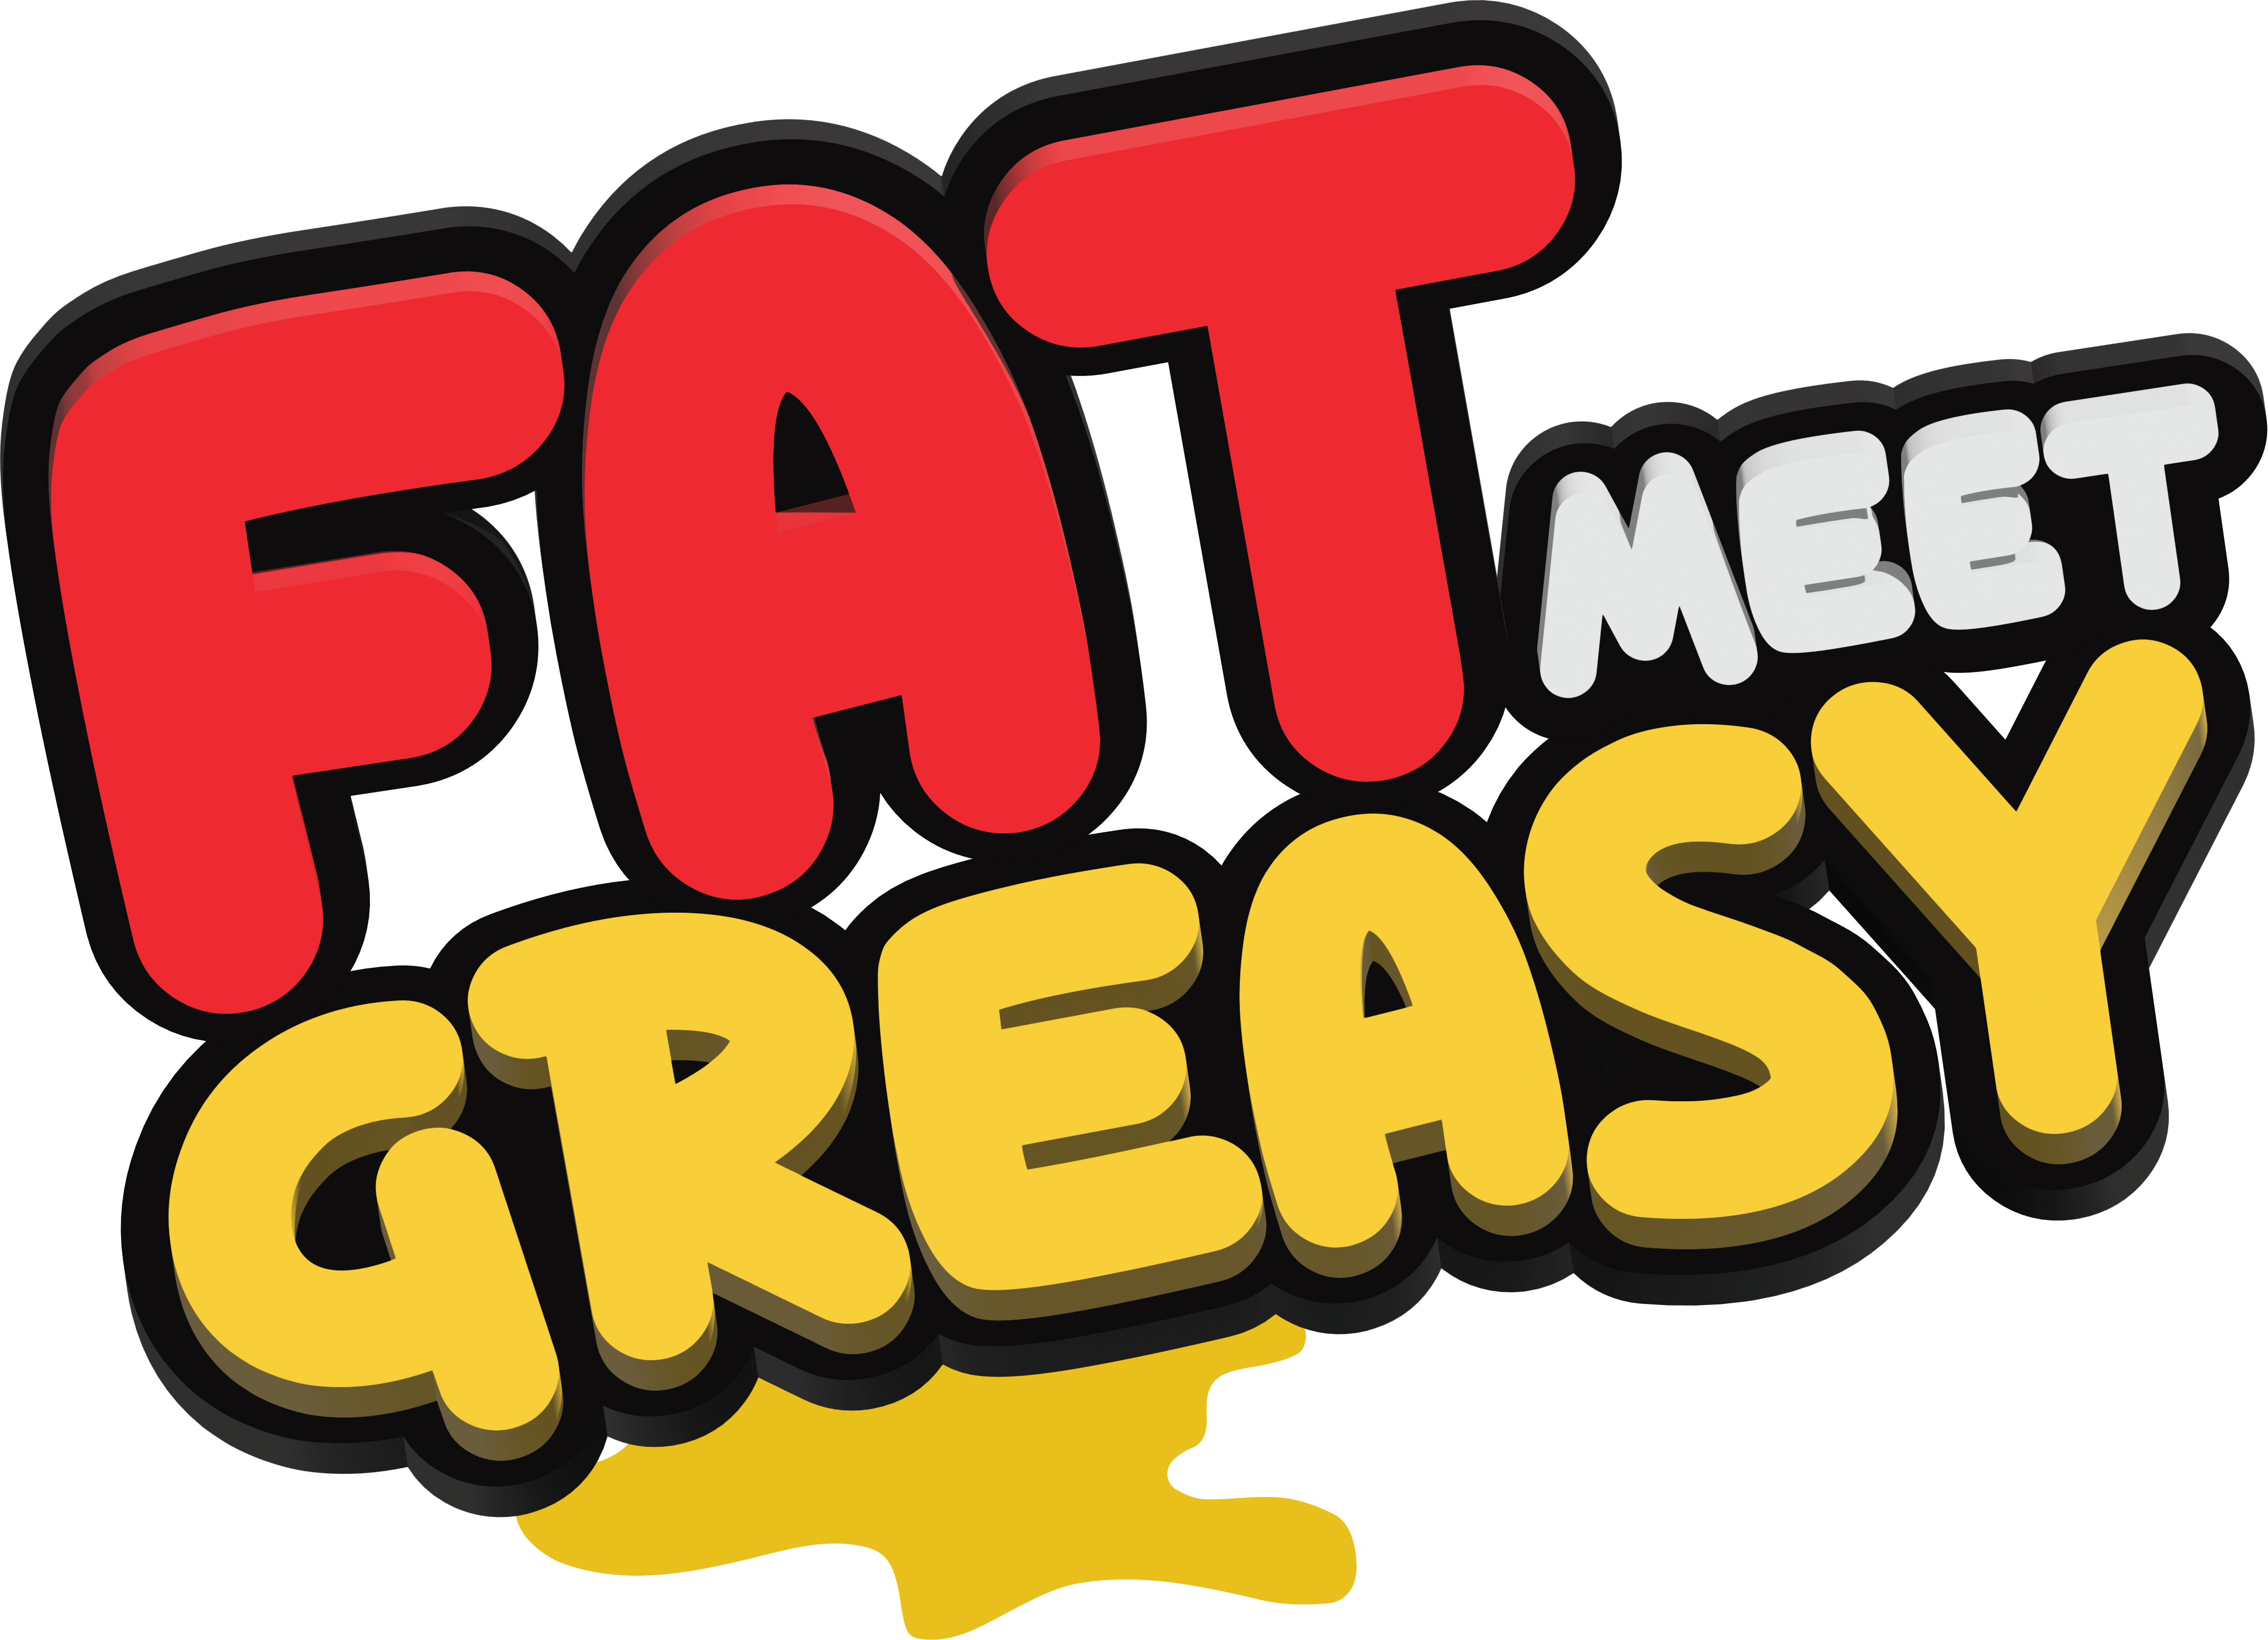 Fat meet Greasy